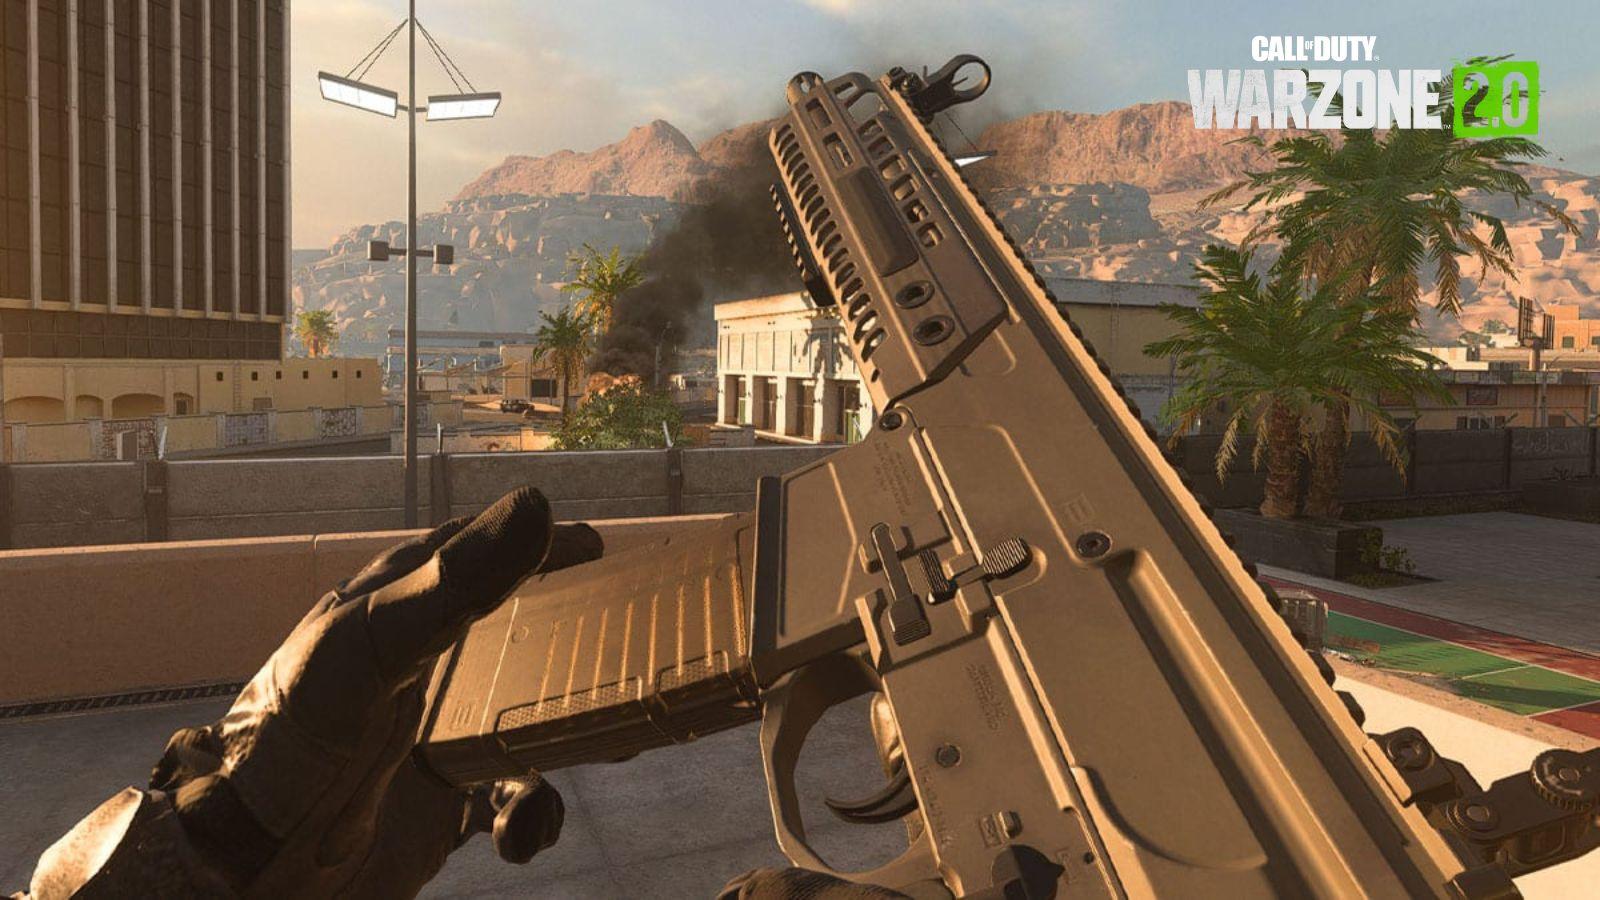 Create a Modern Warfare 2 All Weapons Ranked - WhosImmortal Tier